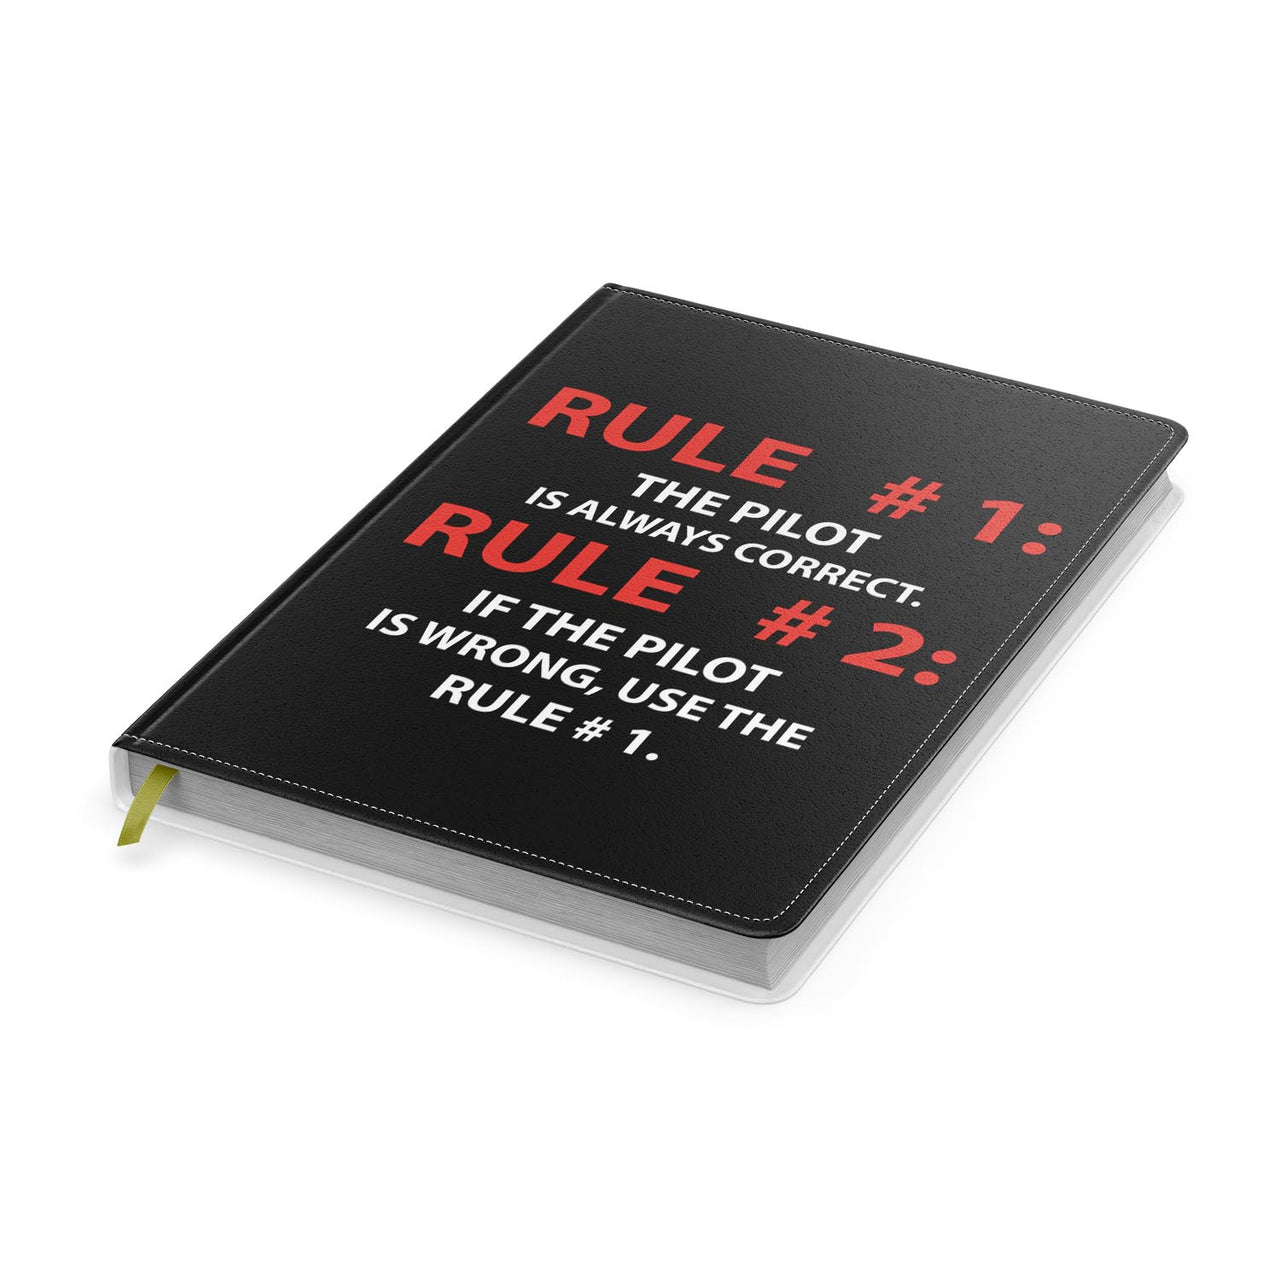 Rule 1 - Pilot is Always Correct Designed Notebooks